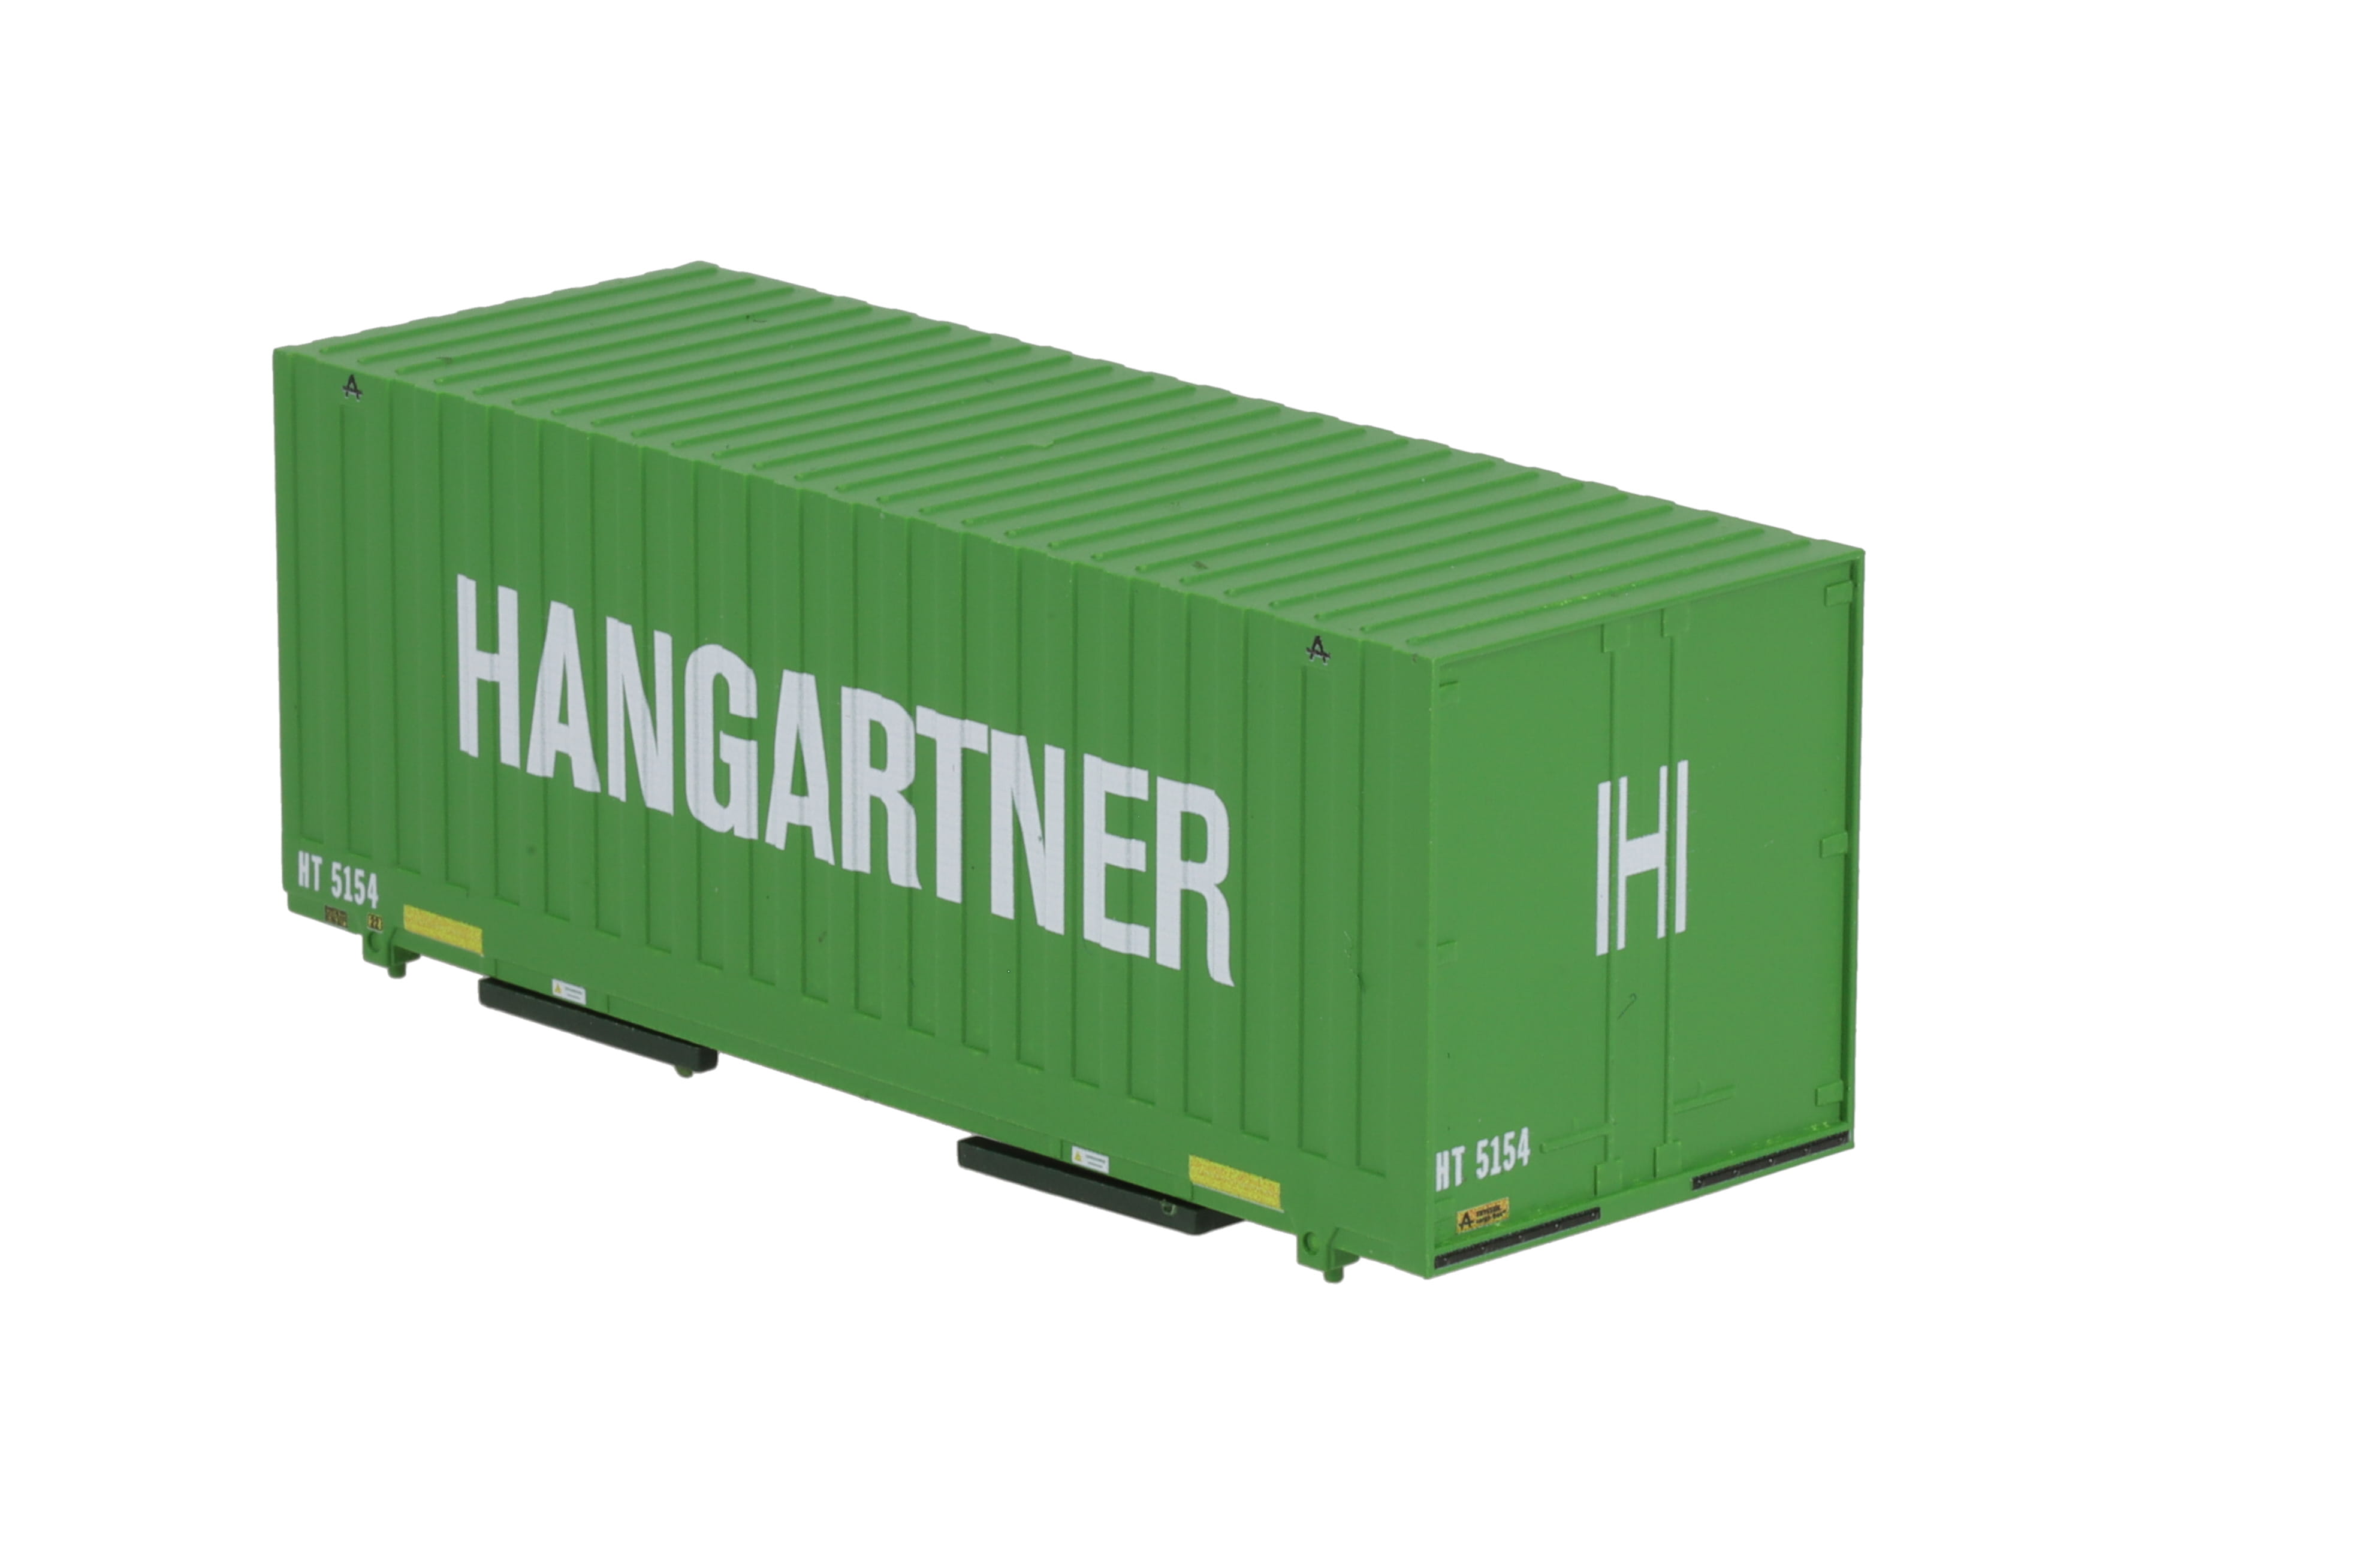 1:87 Container WB-C715 HANGAR Wechselbehälter WB-C 715 Thyssen Cargo-Box, Aufschrift: HANGARTNER, grün, Behälter-Nr: HT 5154